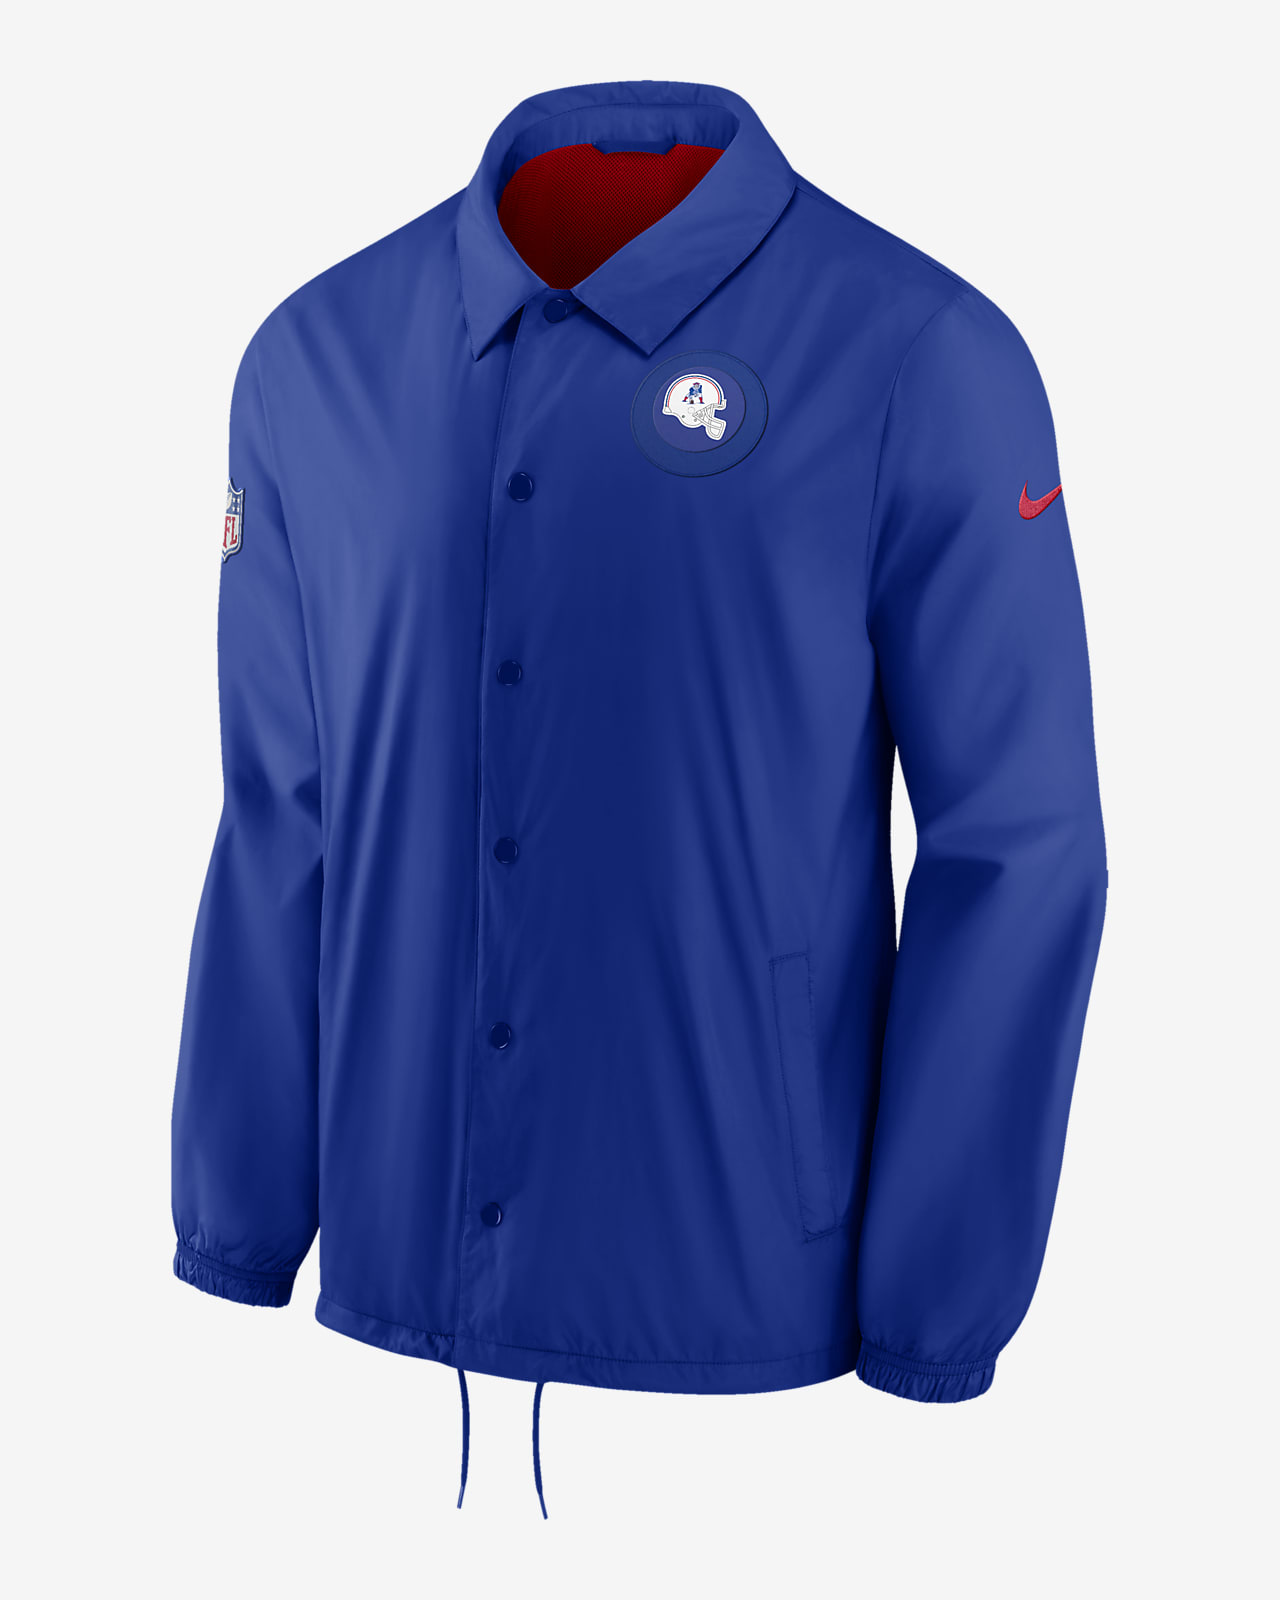 Nike Coaches (NFL New England Patriots) Men's Jacket